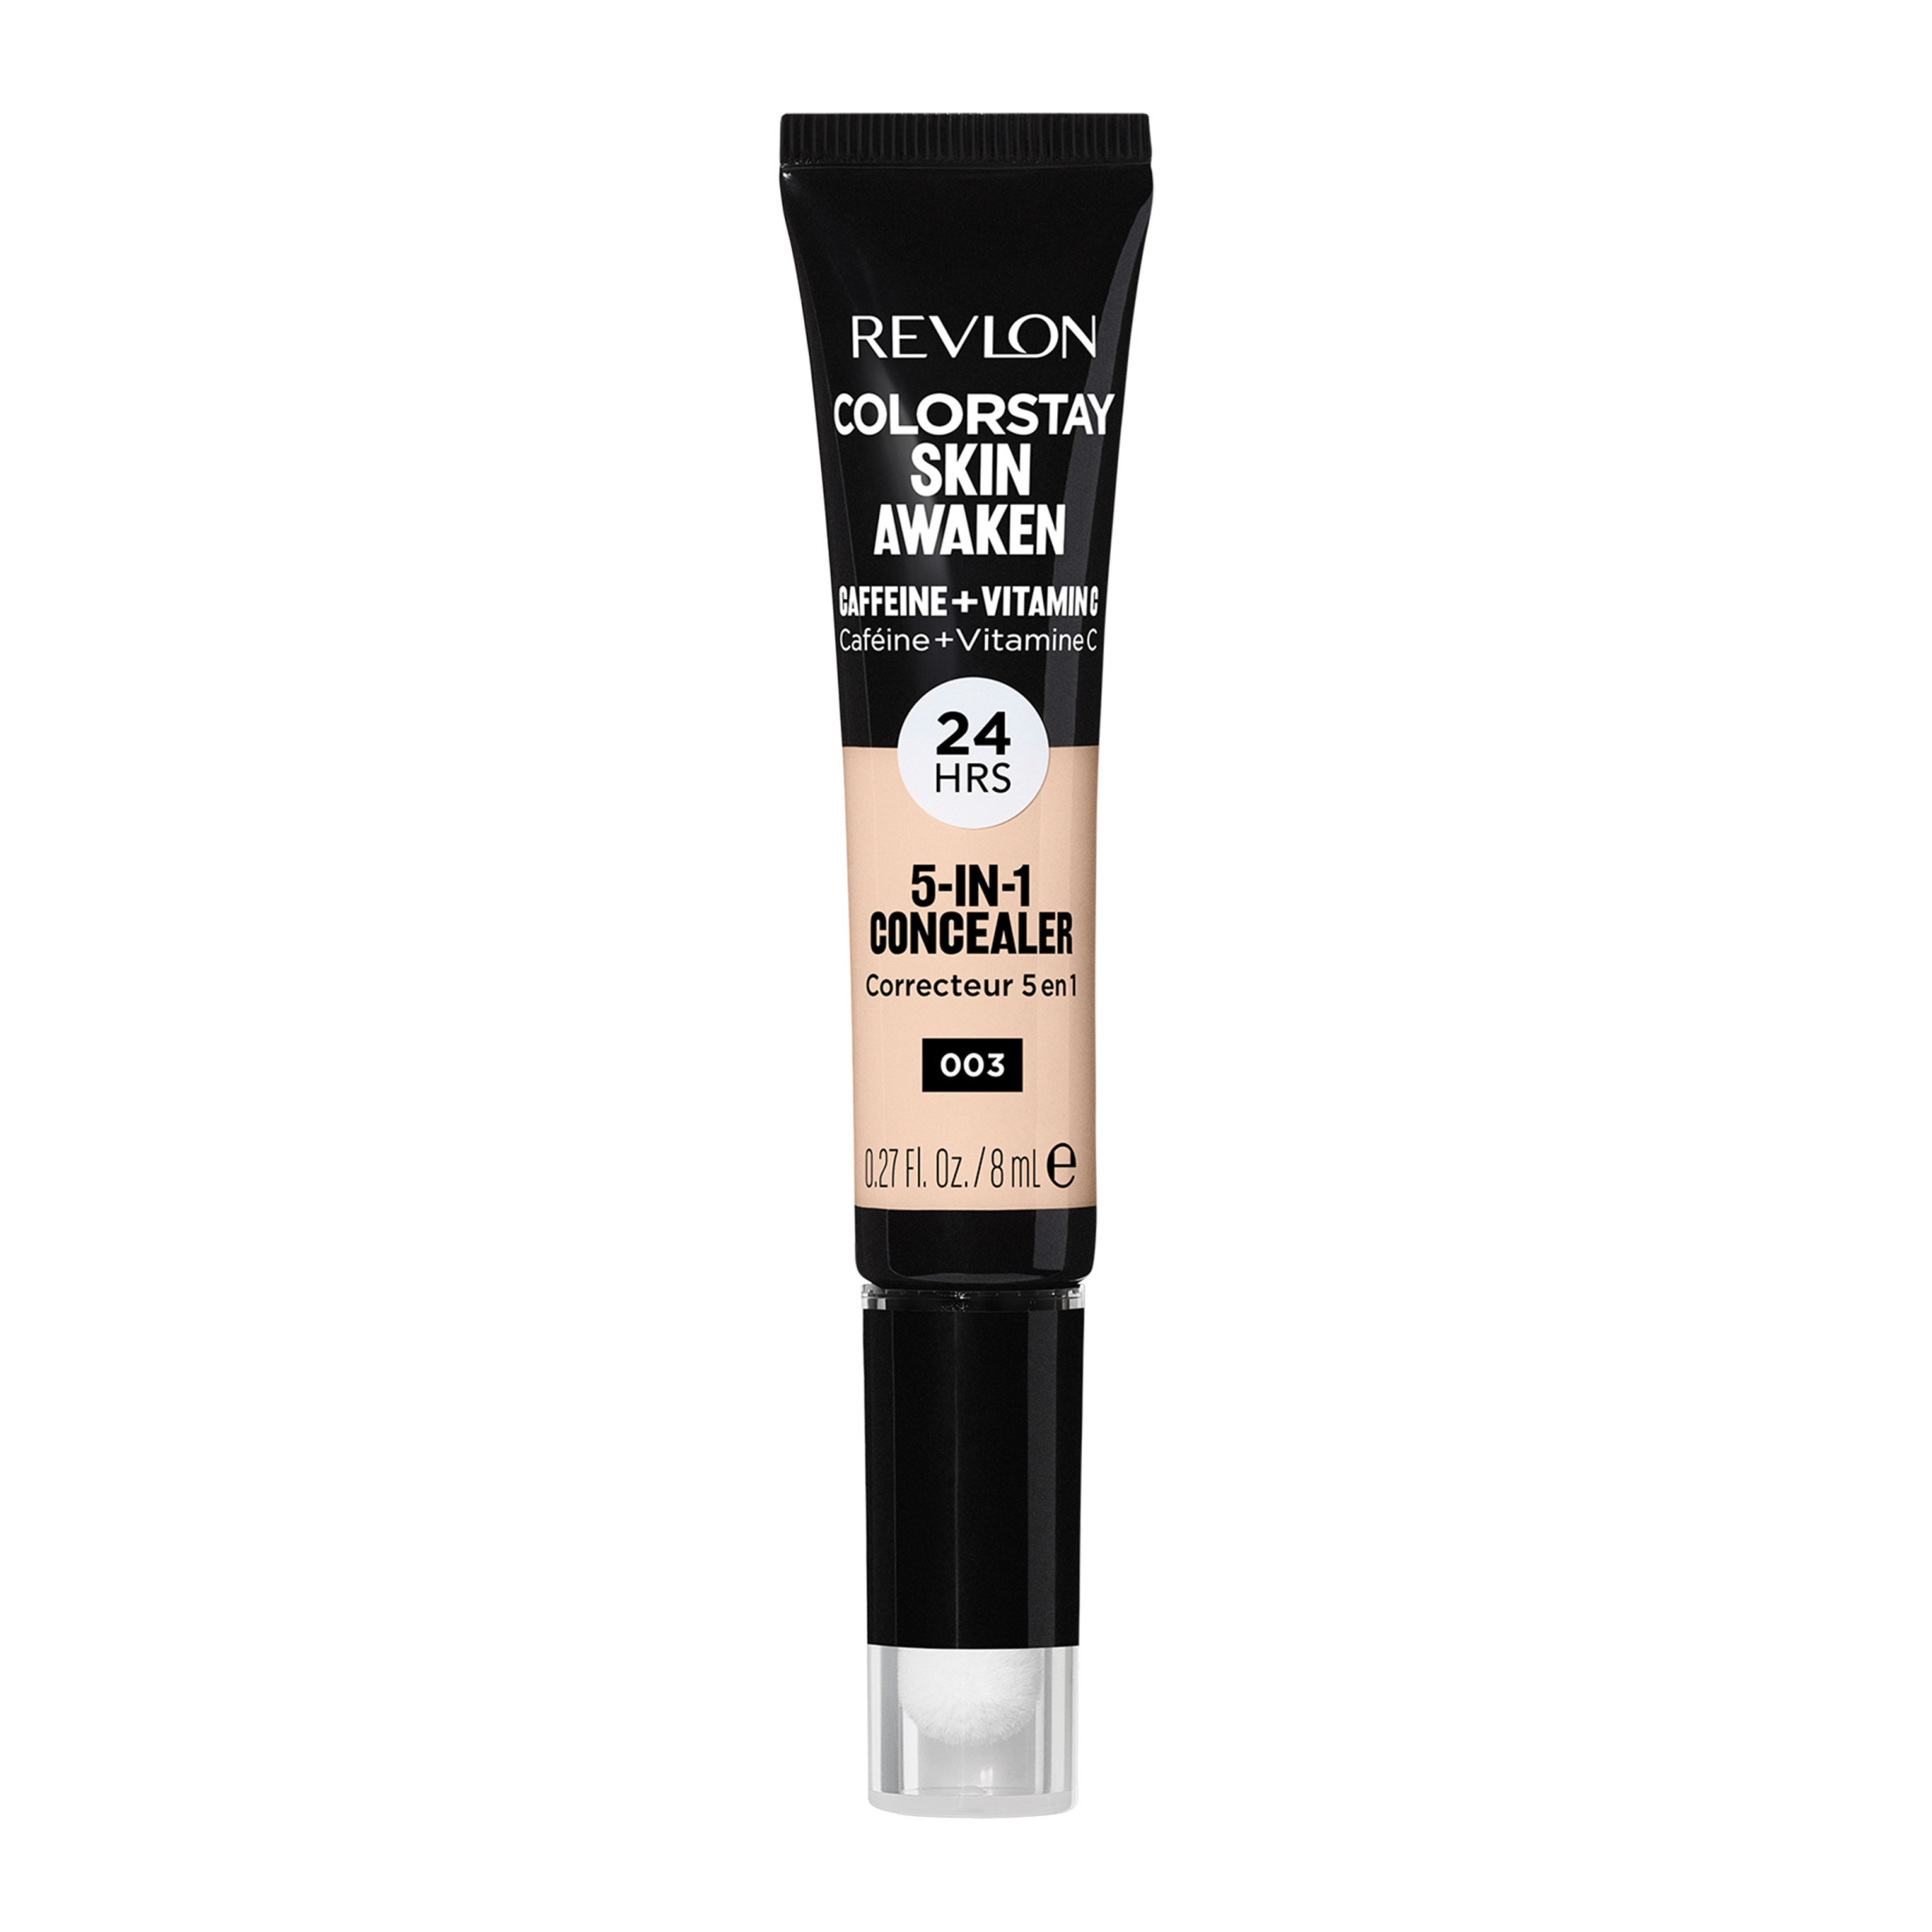 Revlon ColorStay Skin Awaken Cream Concealer Makeup, Longwear, 003 Cool Ivory, 0.27 fl oz - image 1 of 11